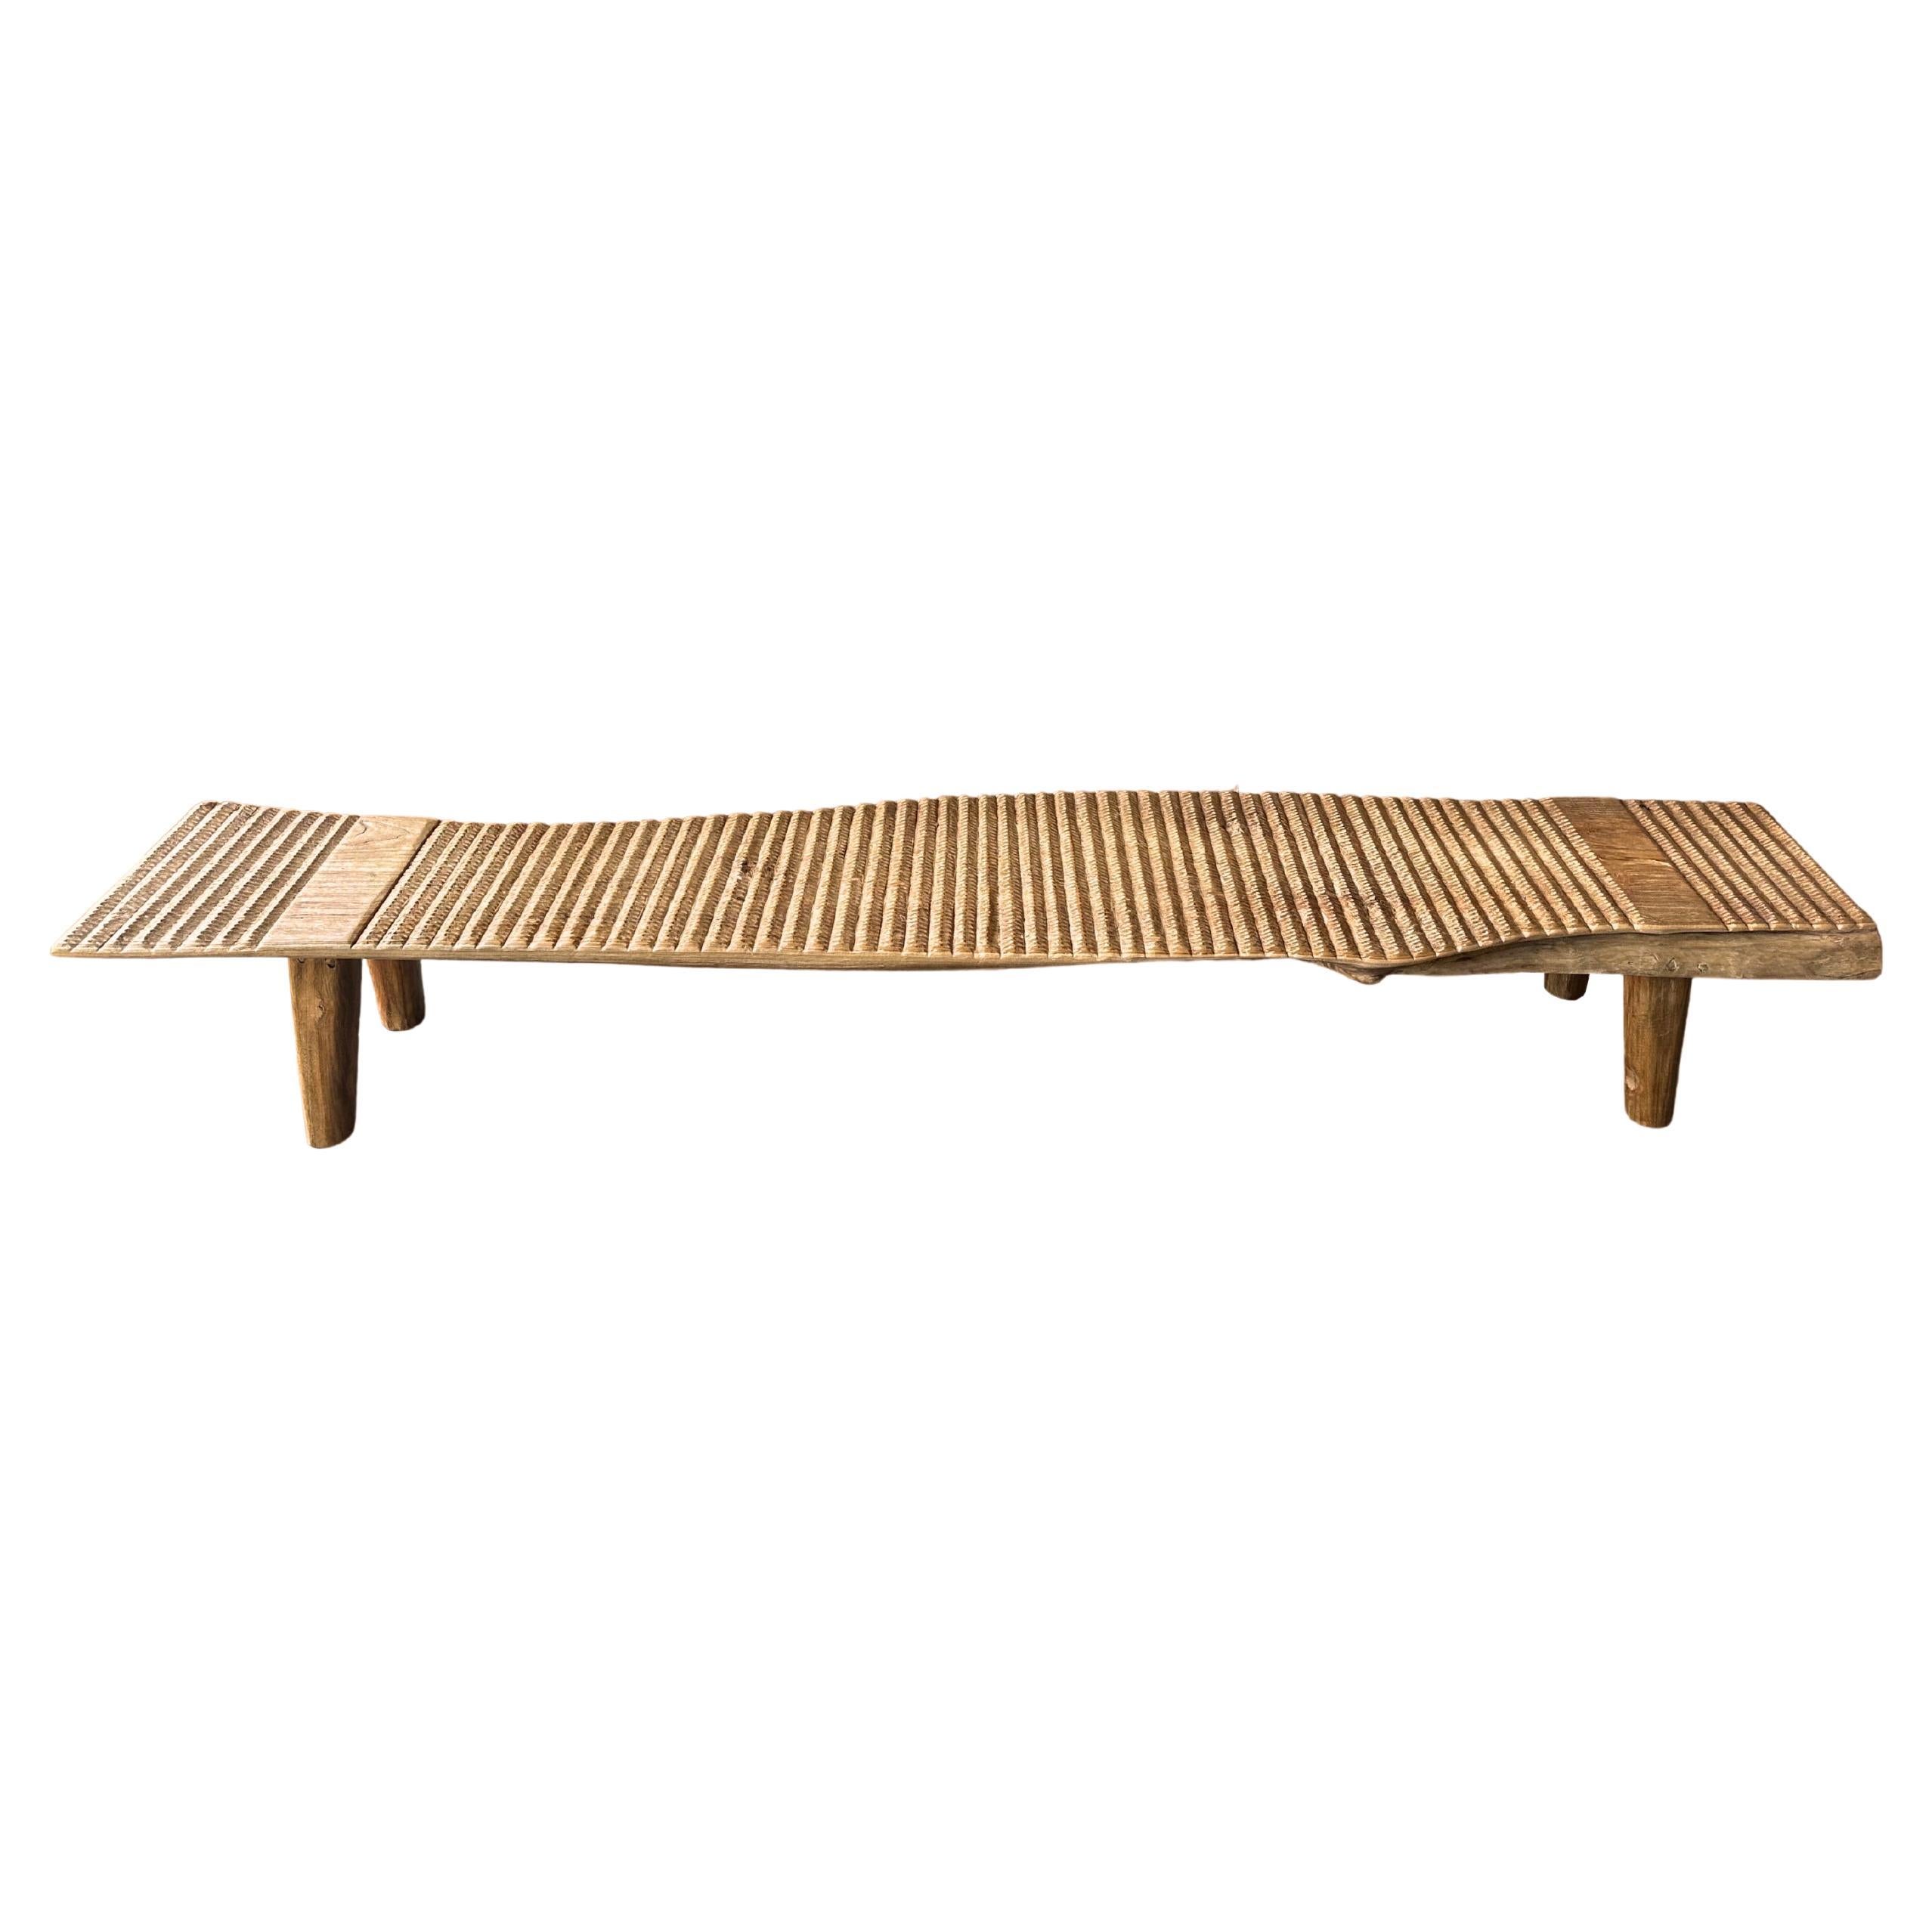 Teak Wood Sculptural Long Bench, Carved Detailing, Modern Organic